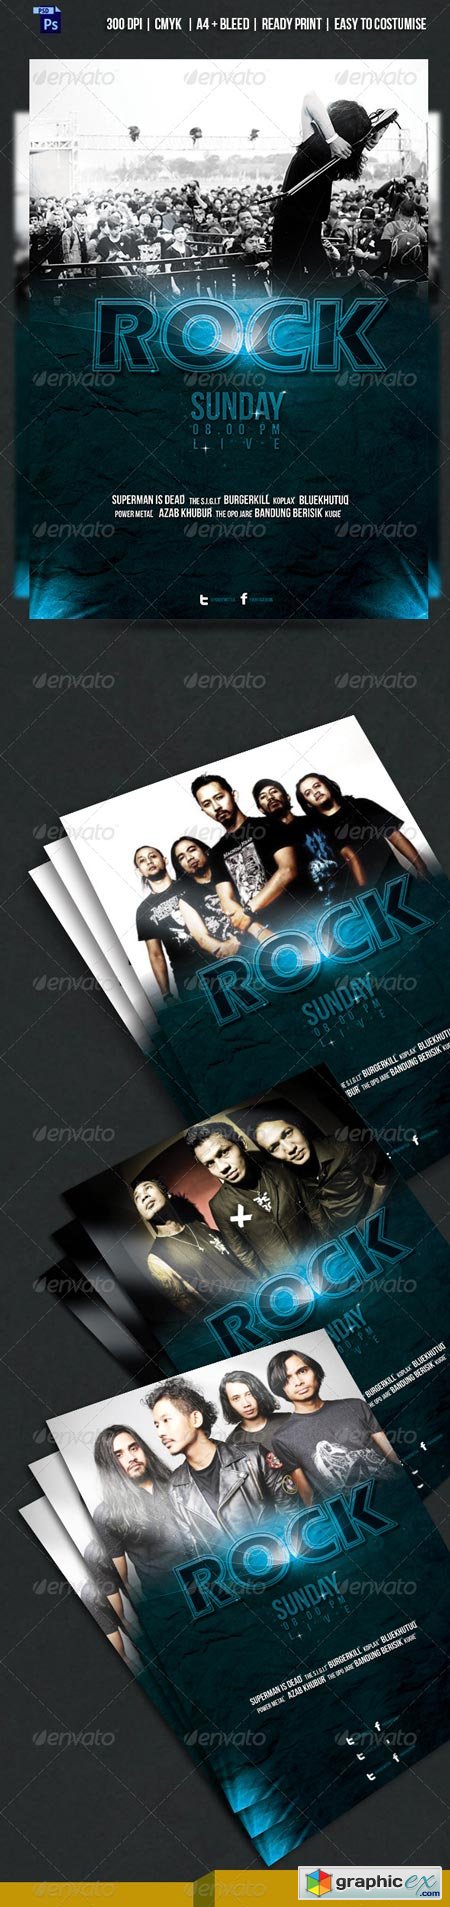 KOPLAX - Rock Band Concert Flyer 6680437